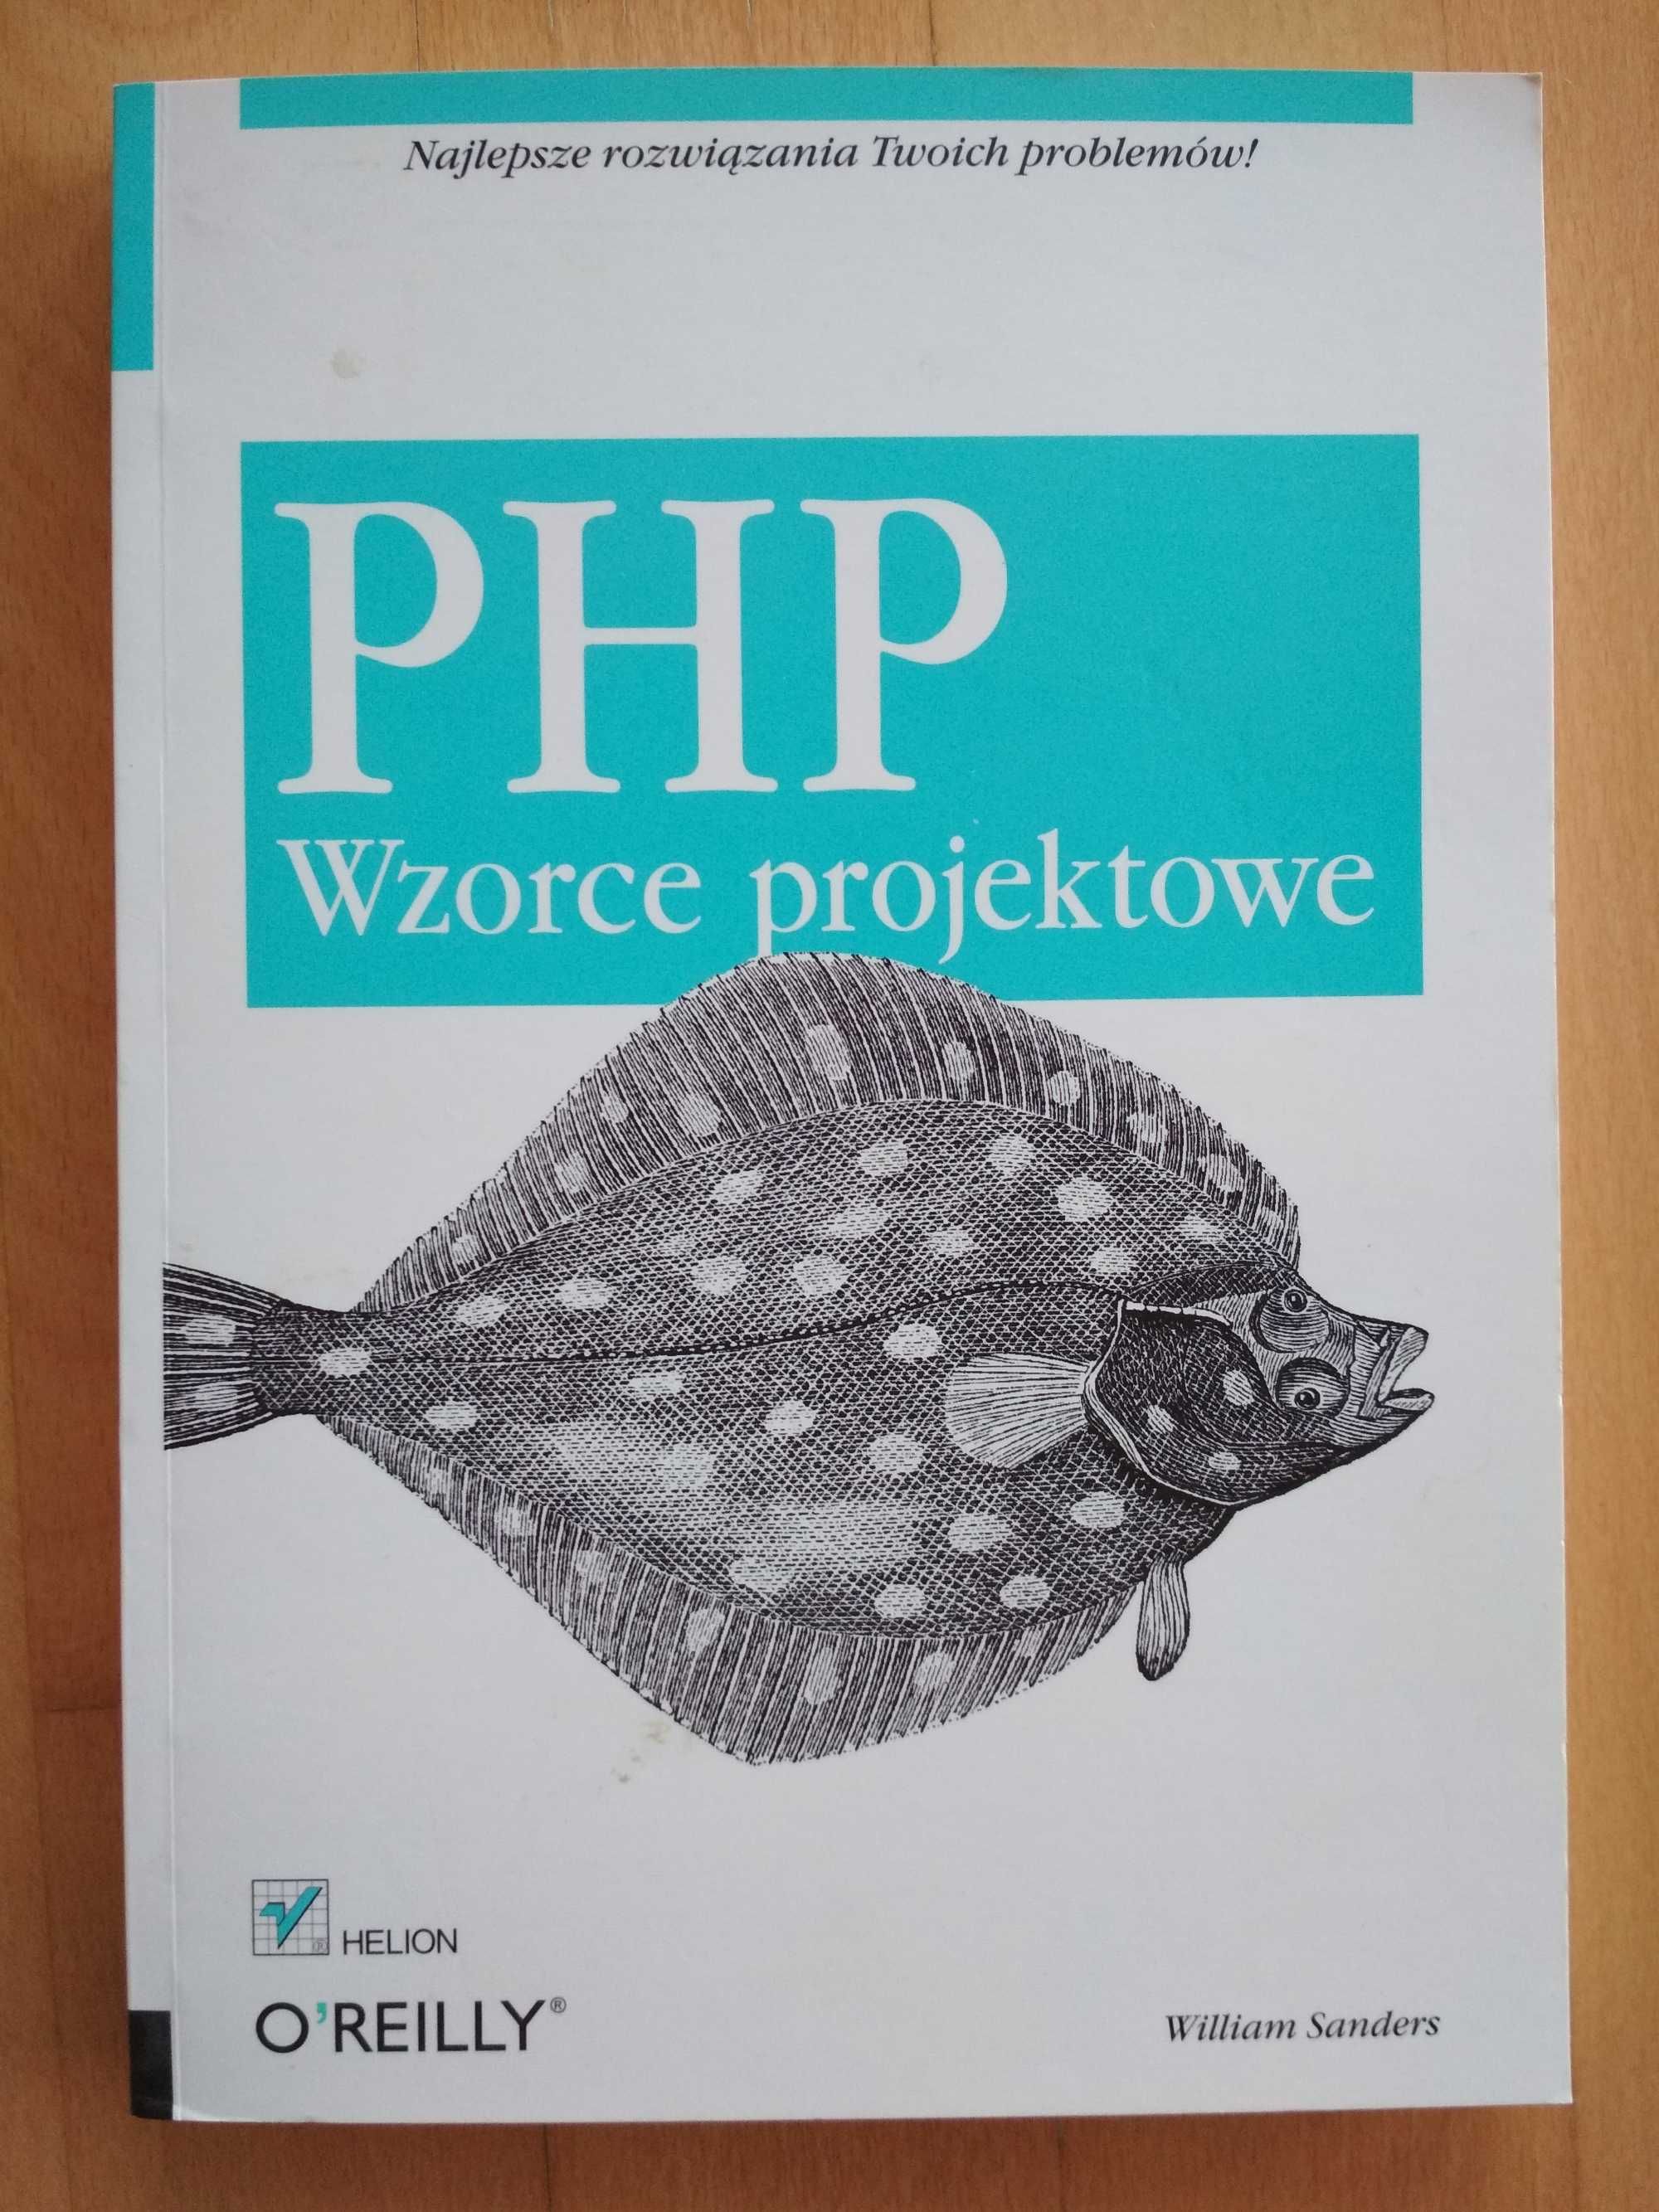 PHP. Wzorce projektowe